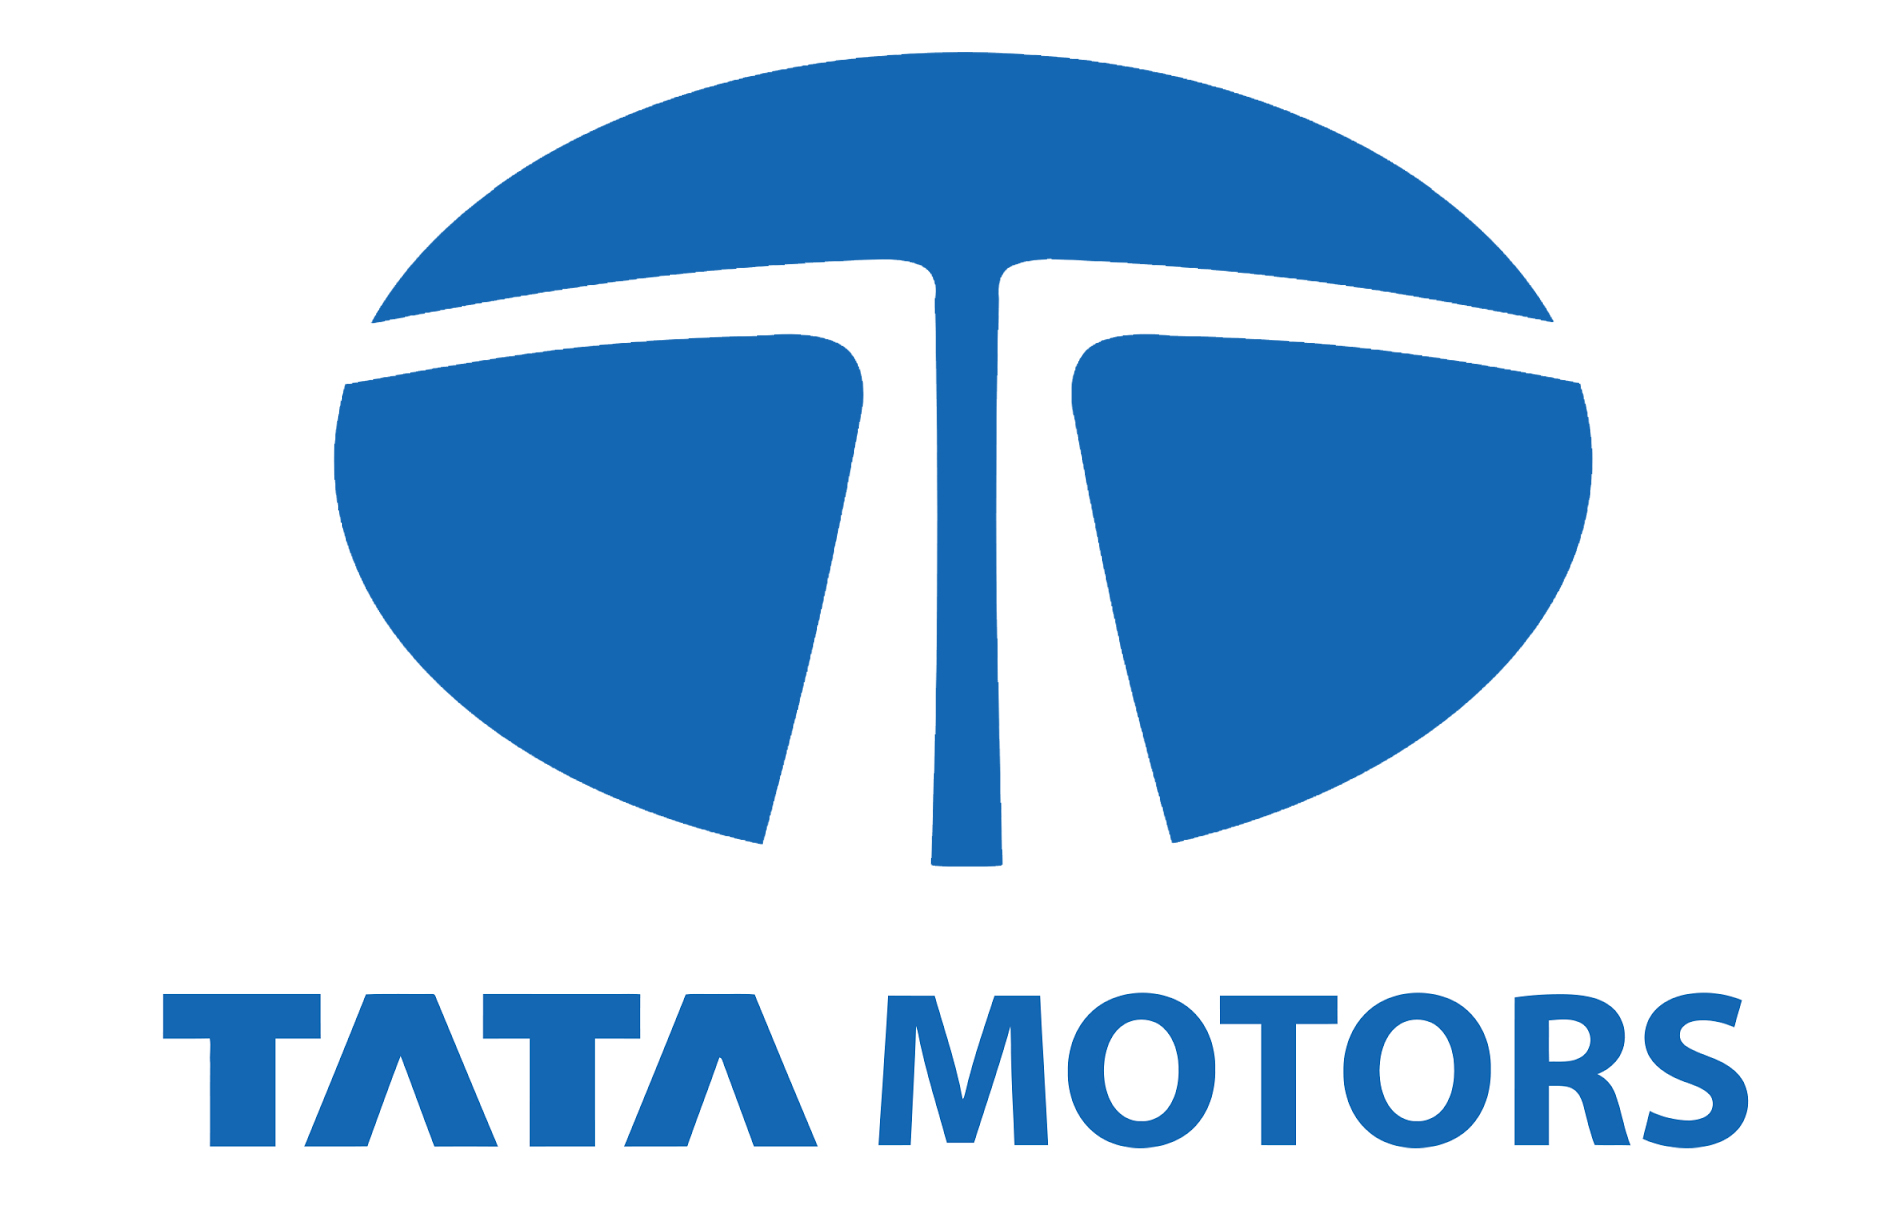 Tata Motors Cars Showroom - Subhangshu Motors|Show Room|Automotive